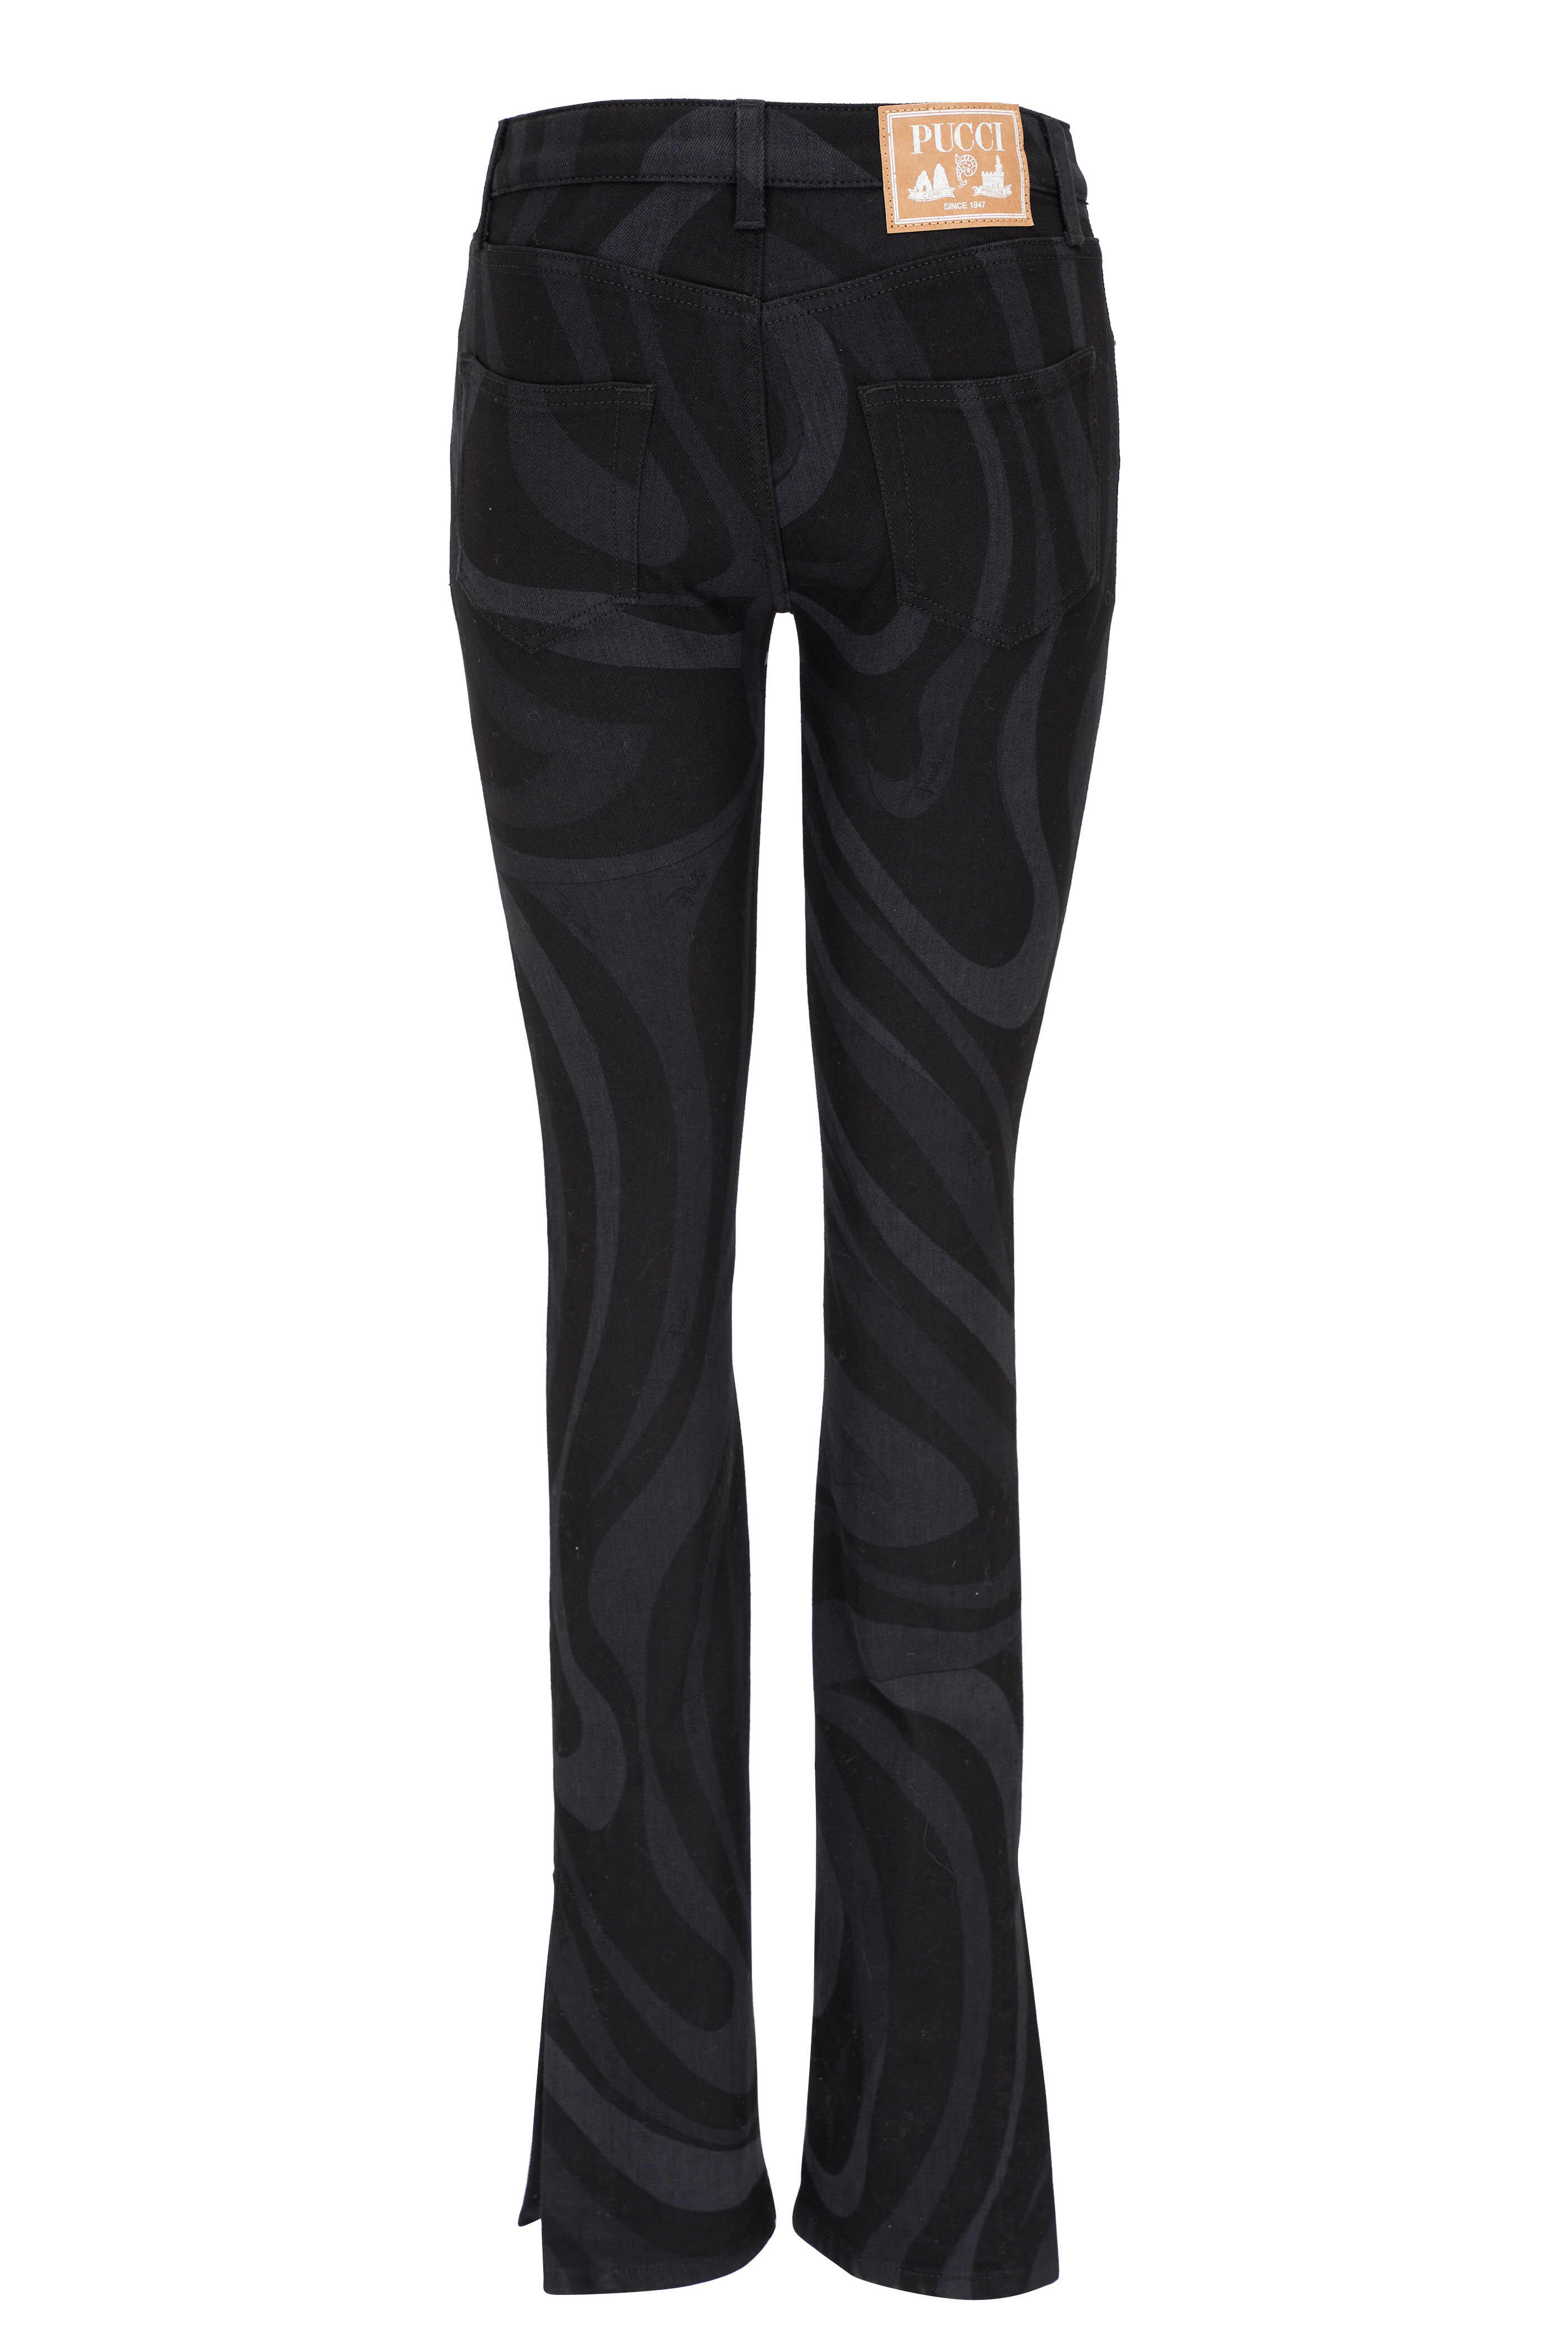 PUCCI Marmo-print waistcoat - Black